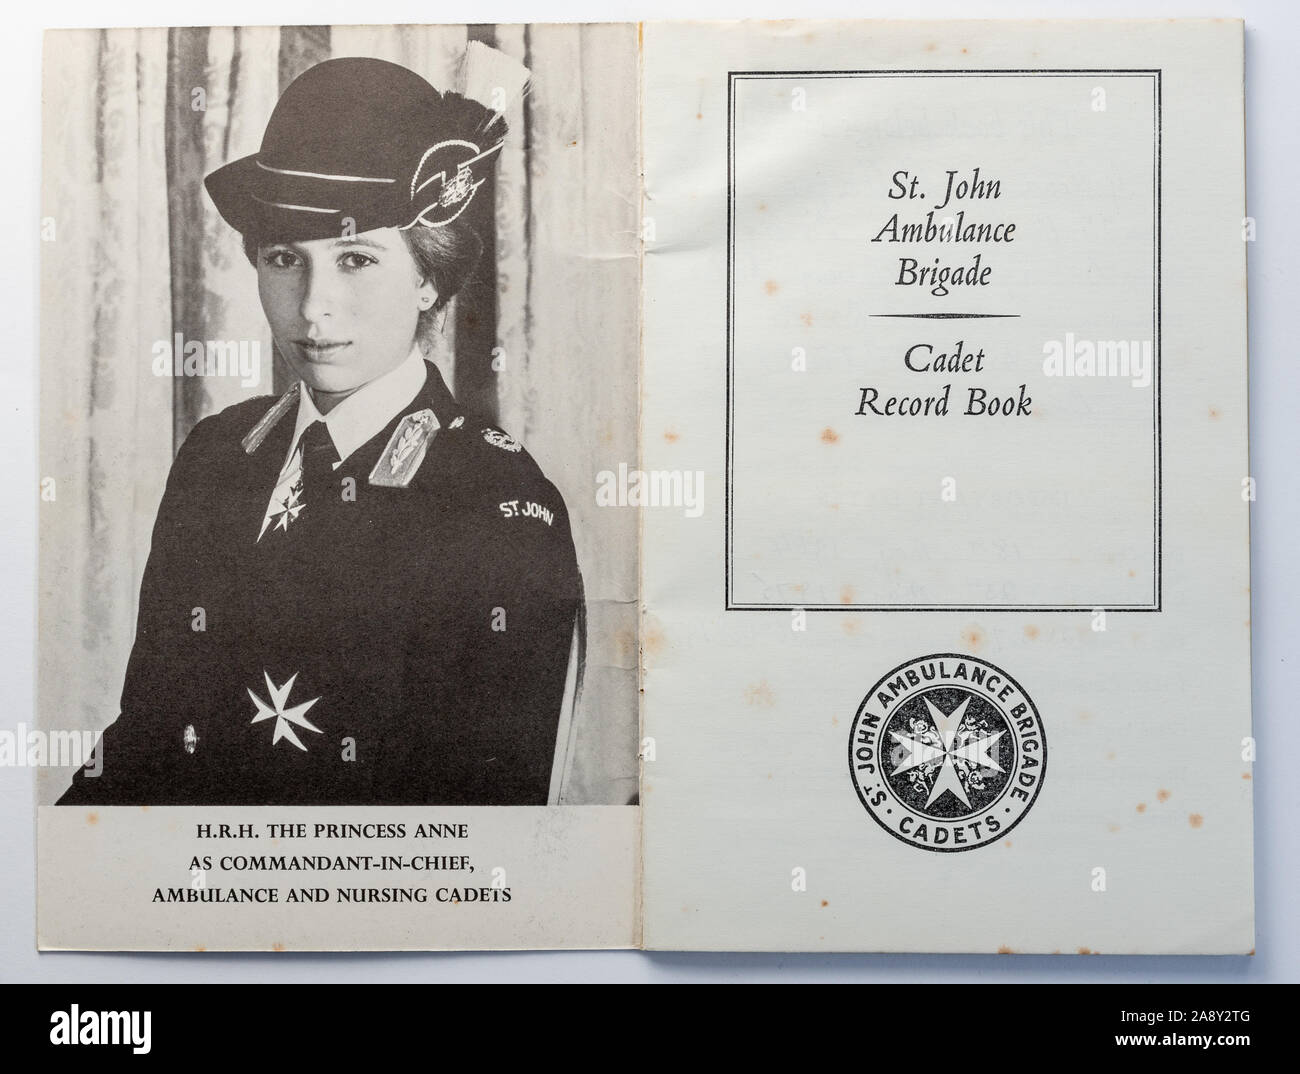 St John Ambulance Brigade cadet record book Stock Photo